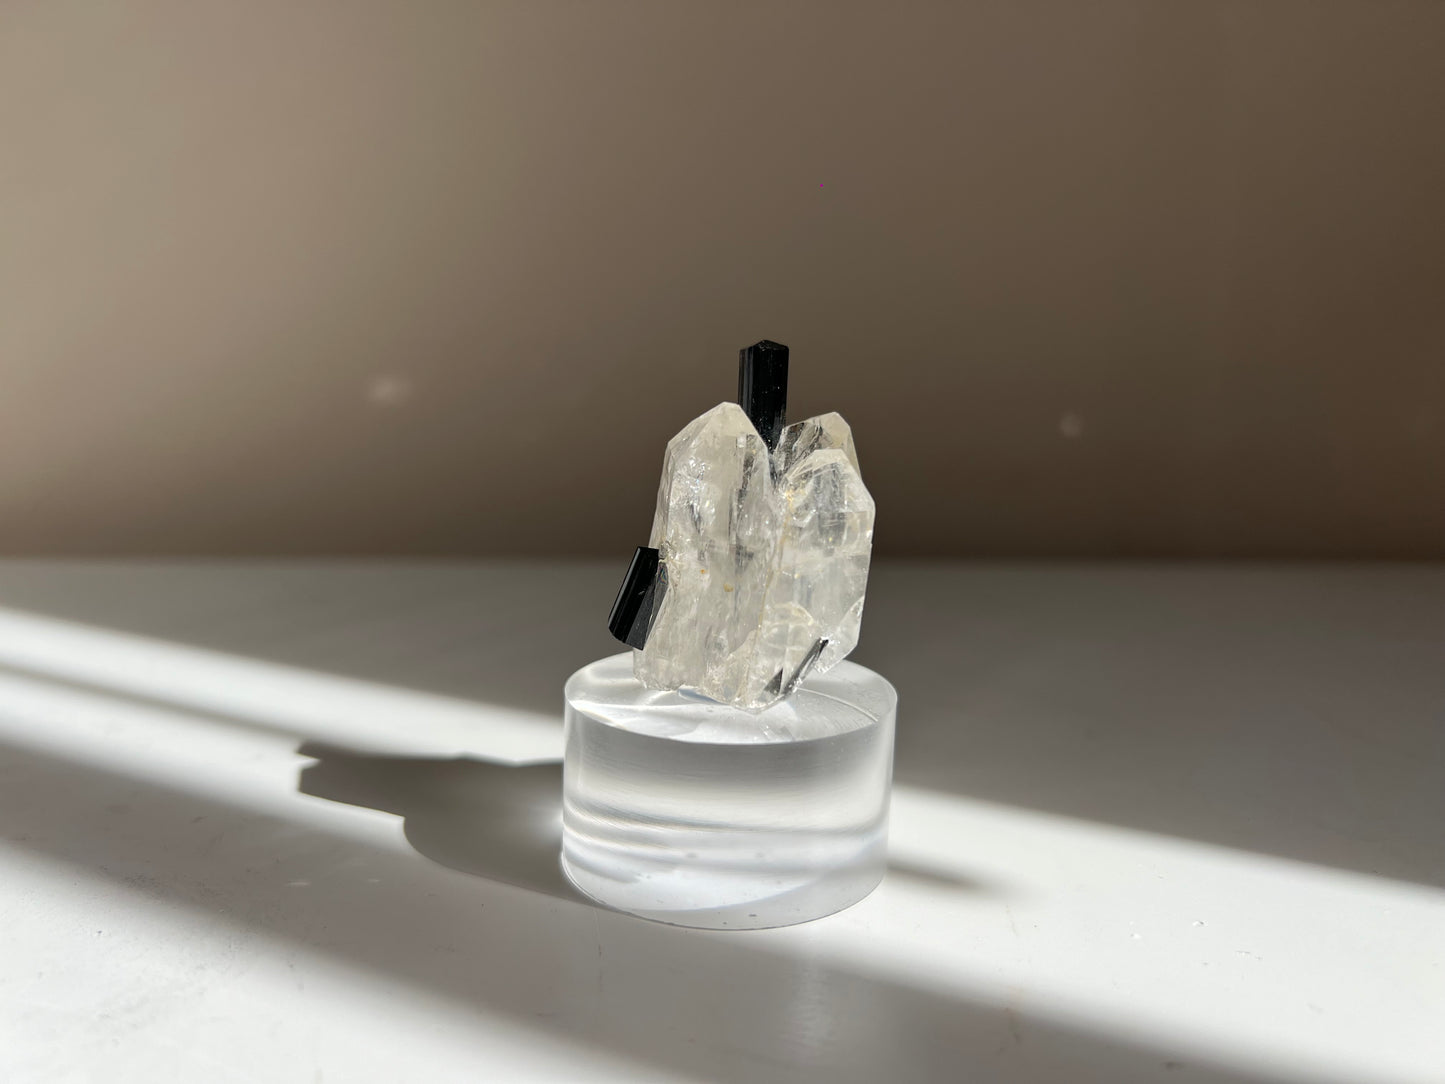 Bergkristal, collectors item